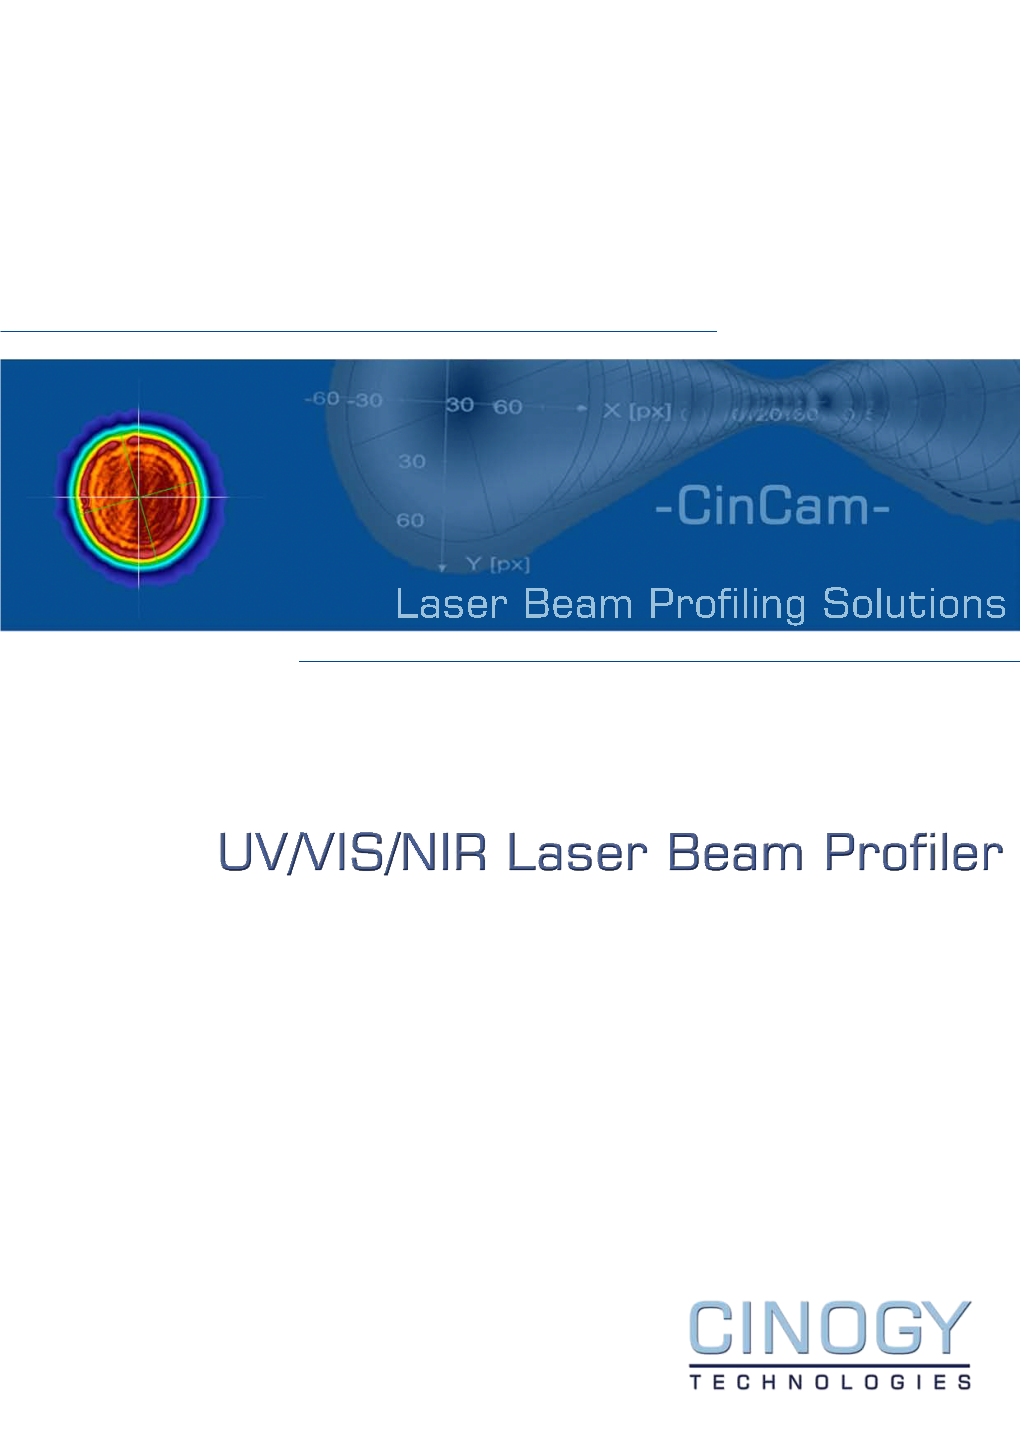 Laser Beam Profiler Cincam Series Brochure